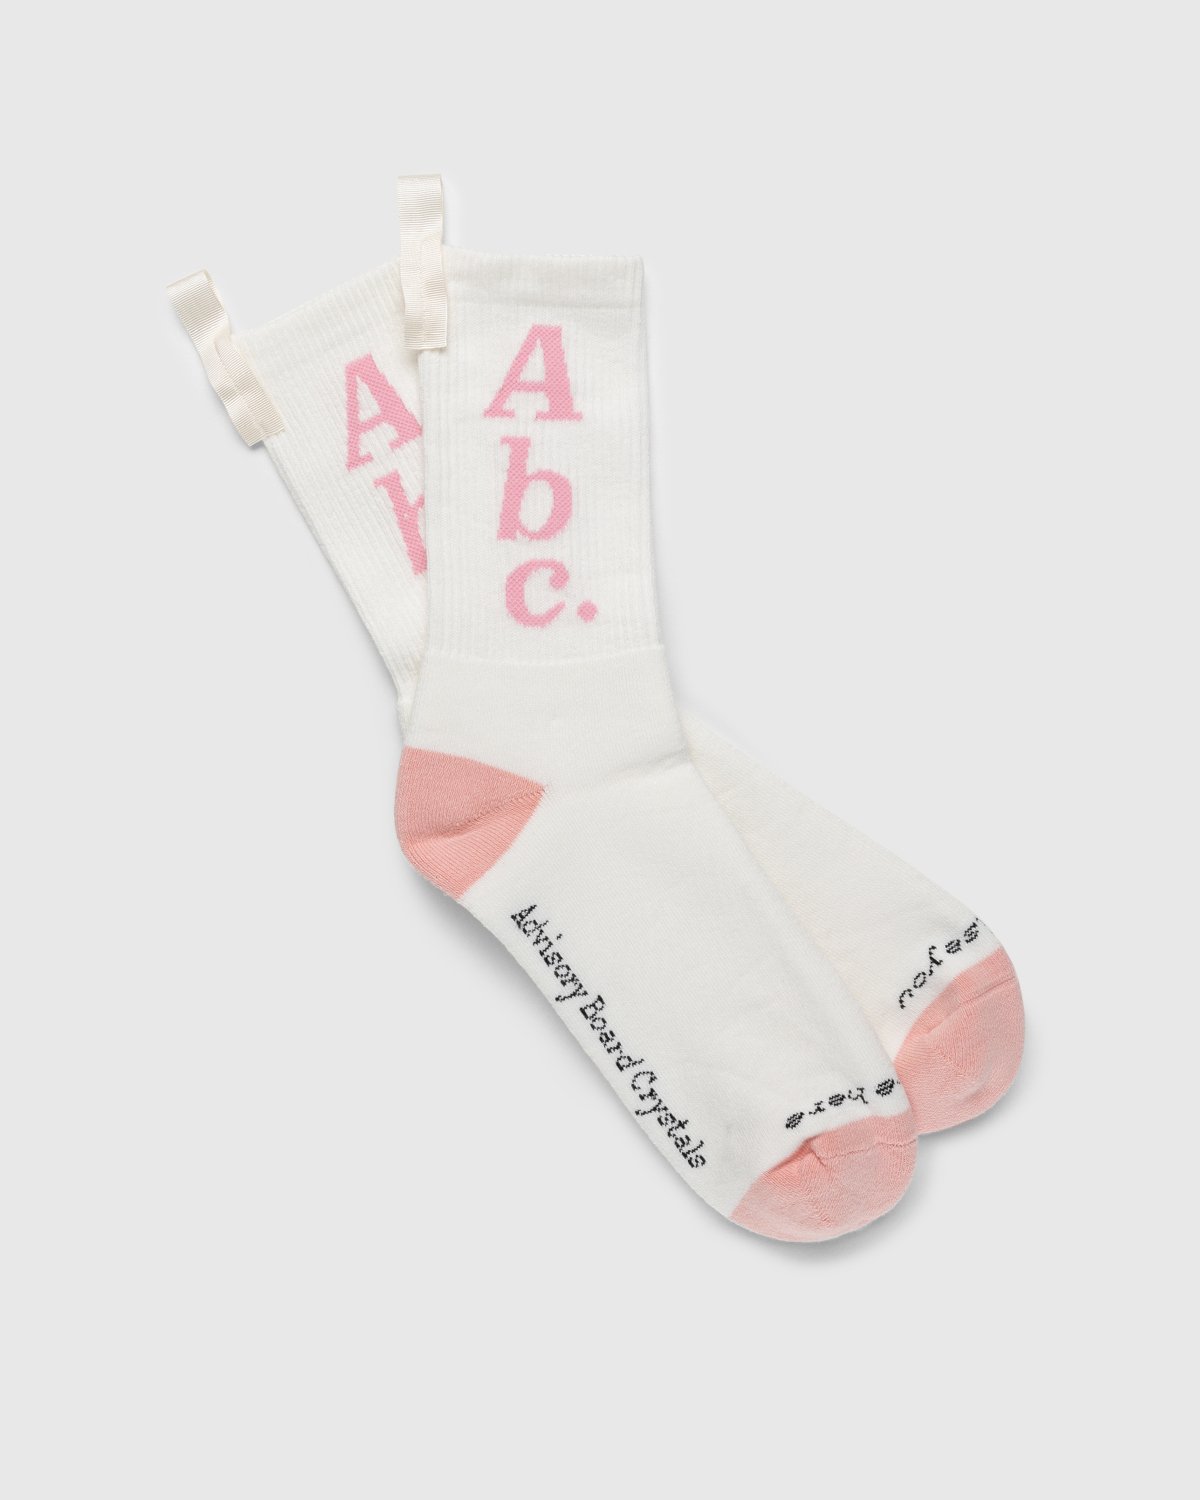 Abc. - Crew Socks Selenite/Morganite - Accessories - White - Image 1